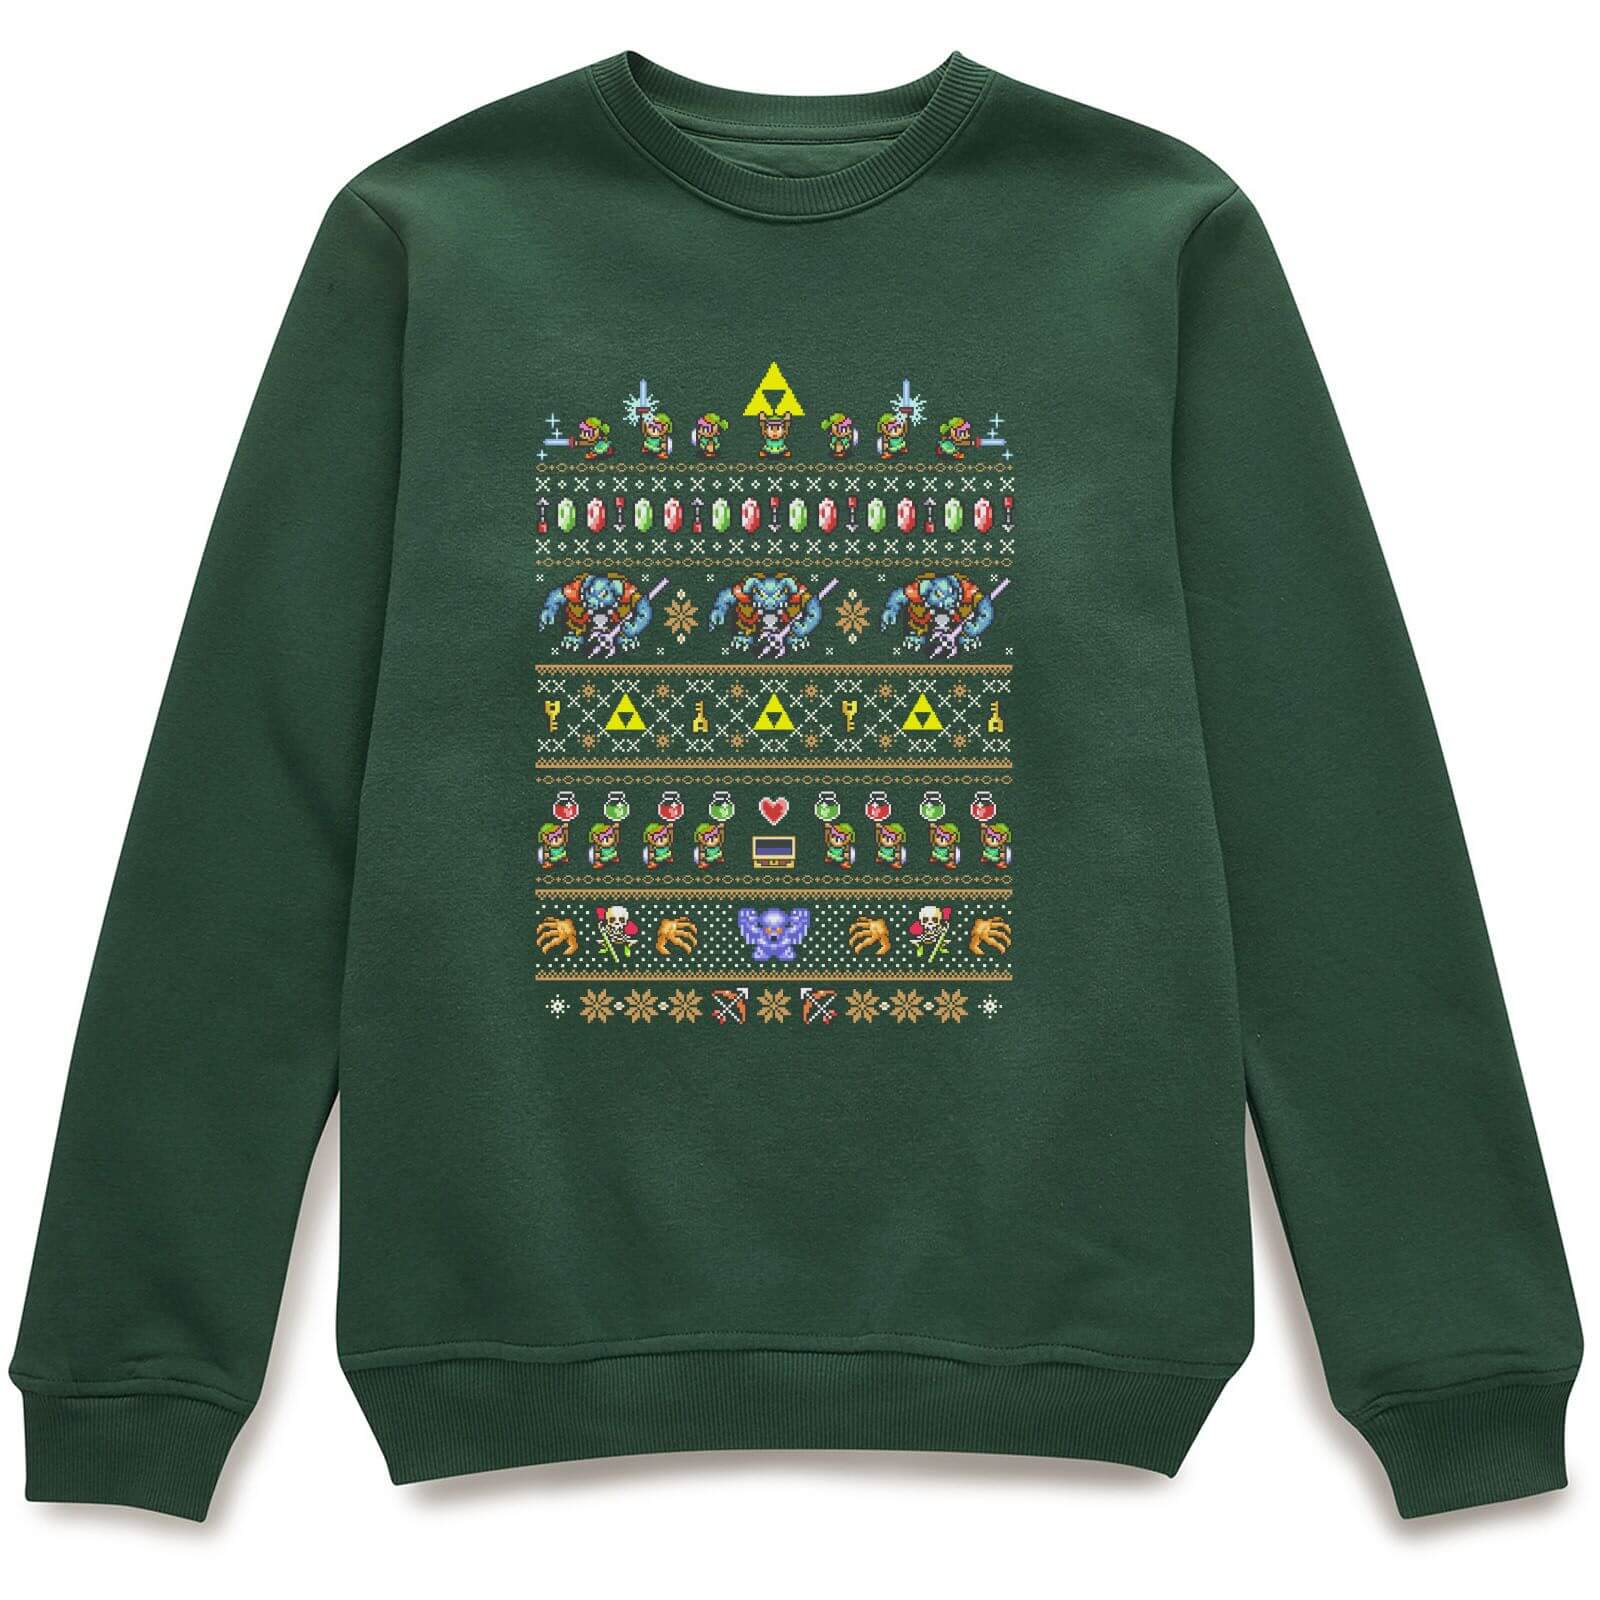 Nintendo The Legend Of Zelda Retro Green Christmas Sweatshirt - L - Green